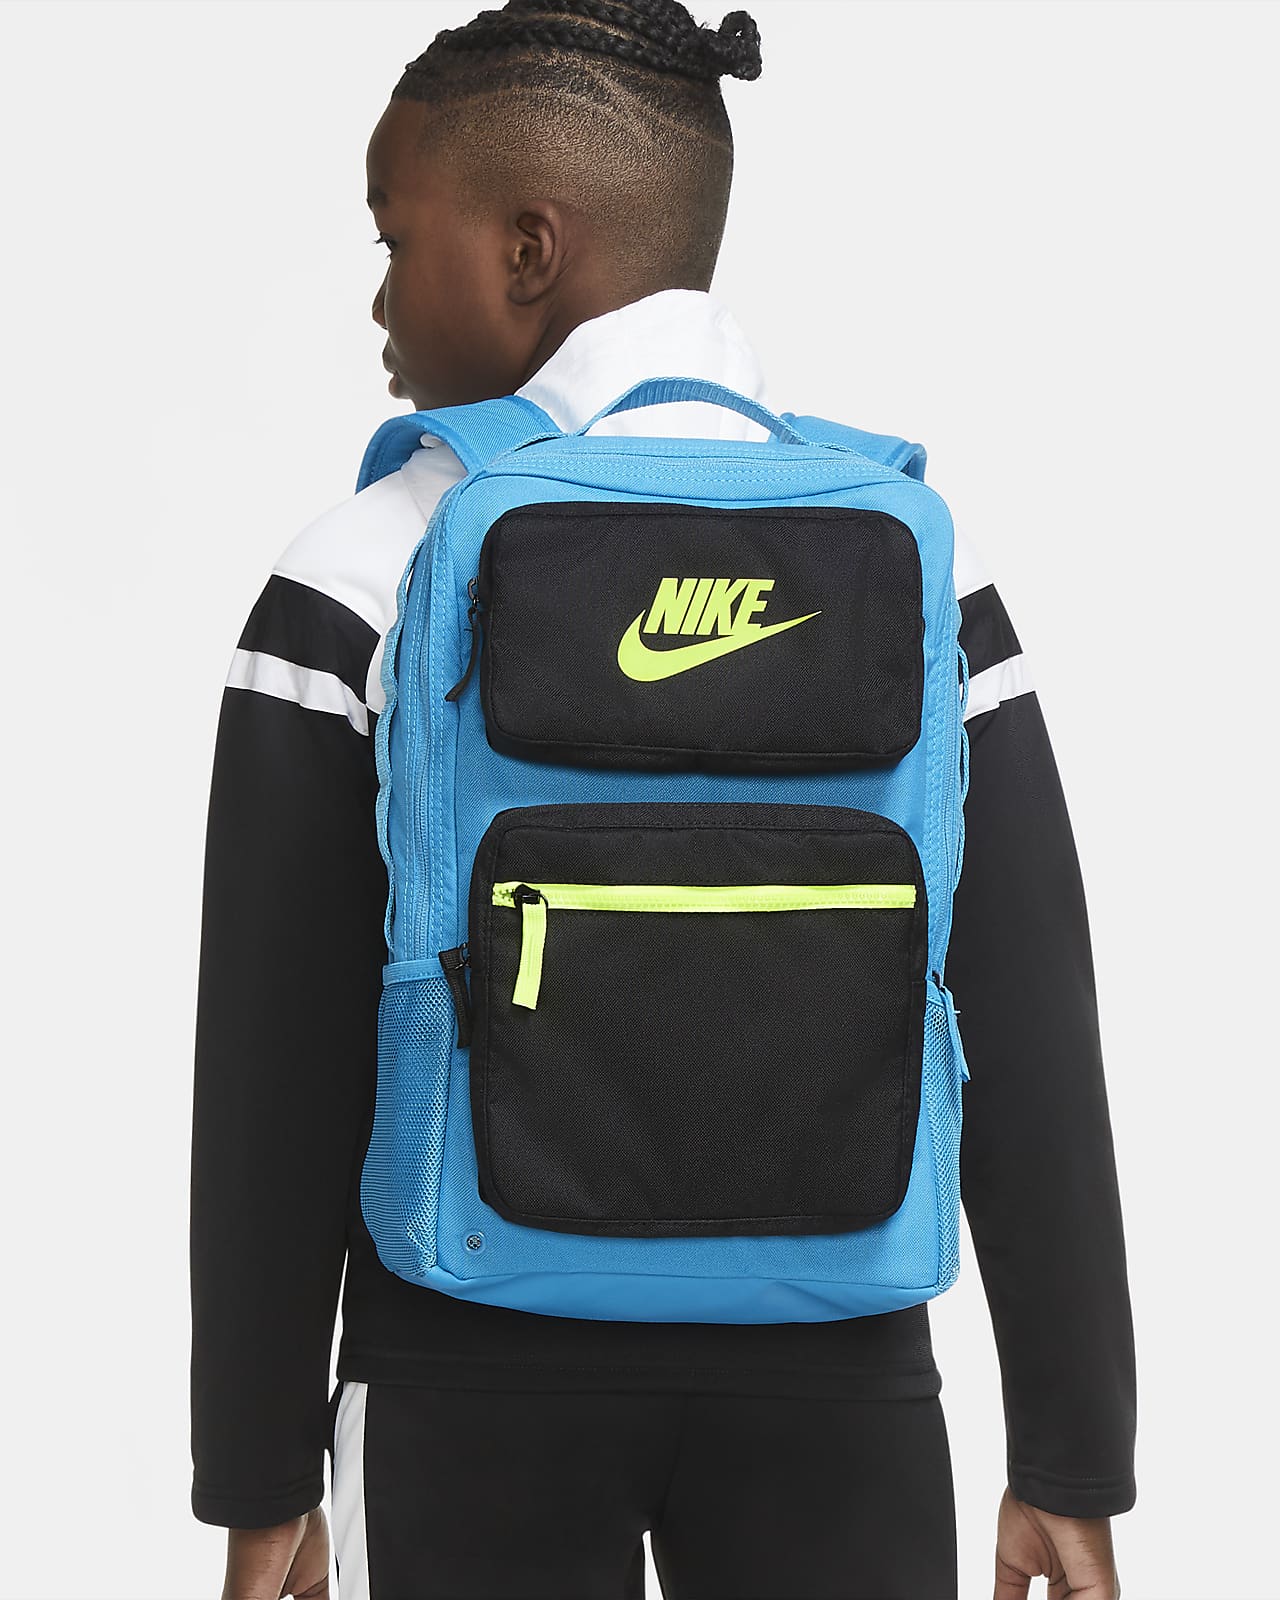 nike future pro backpack